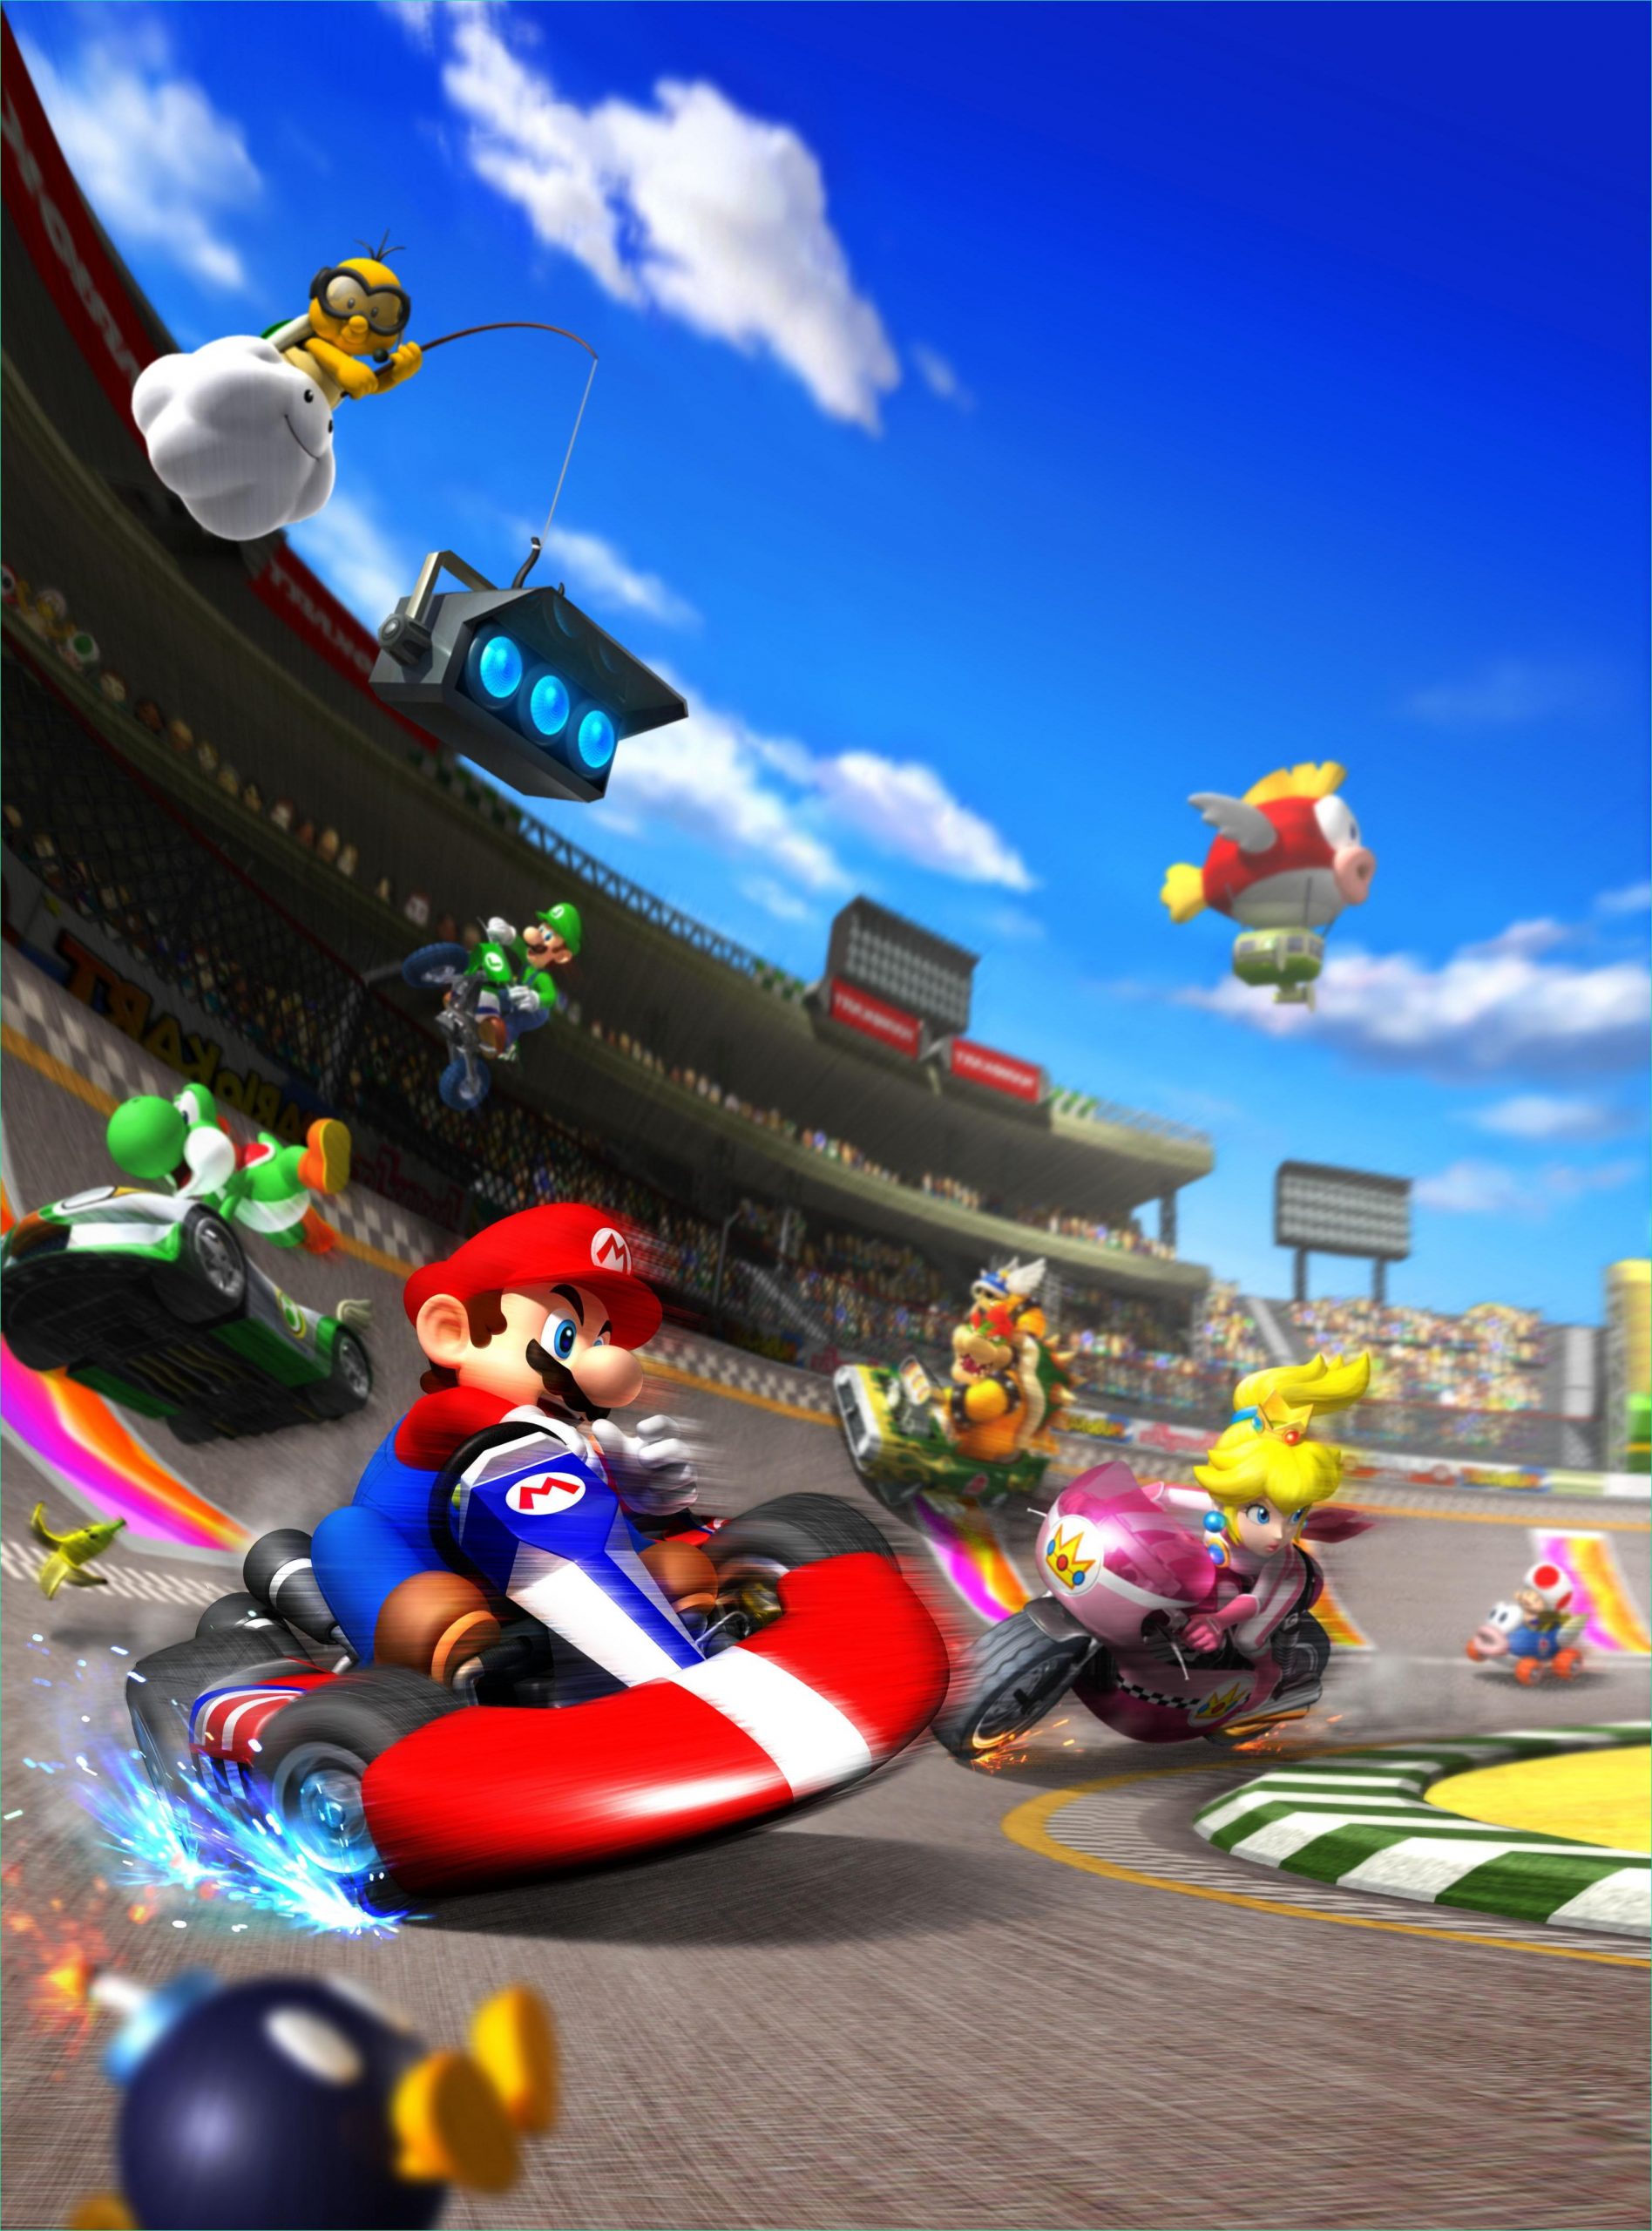 Mario Kart Dessin Impressionnant Image Mario Kart Wii Artwork Including A Massive Selection Of